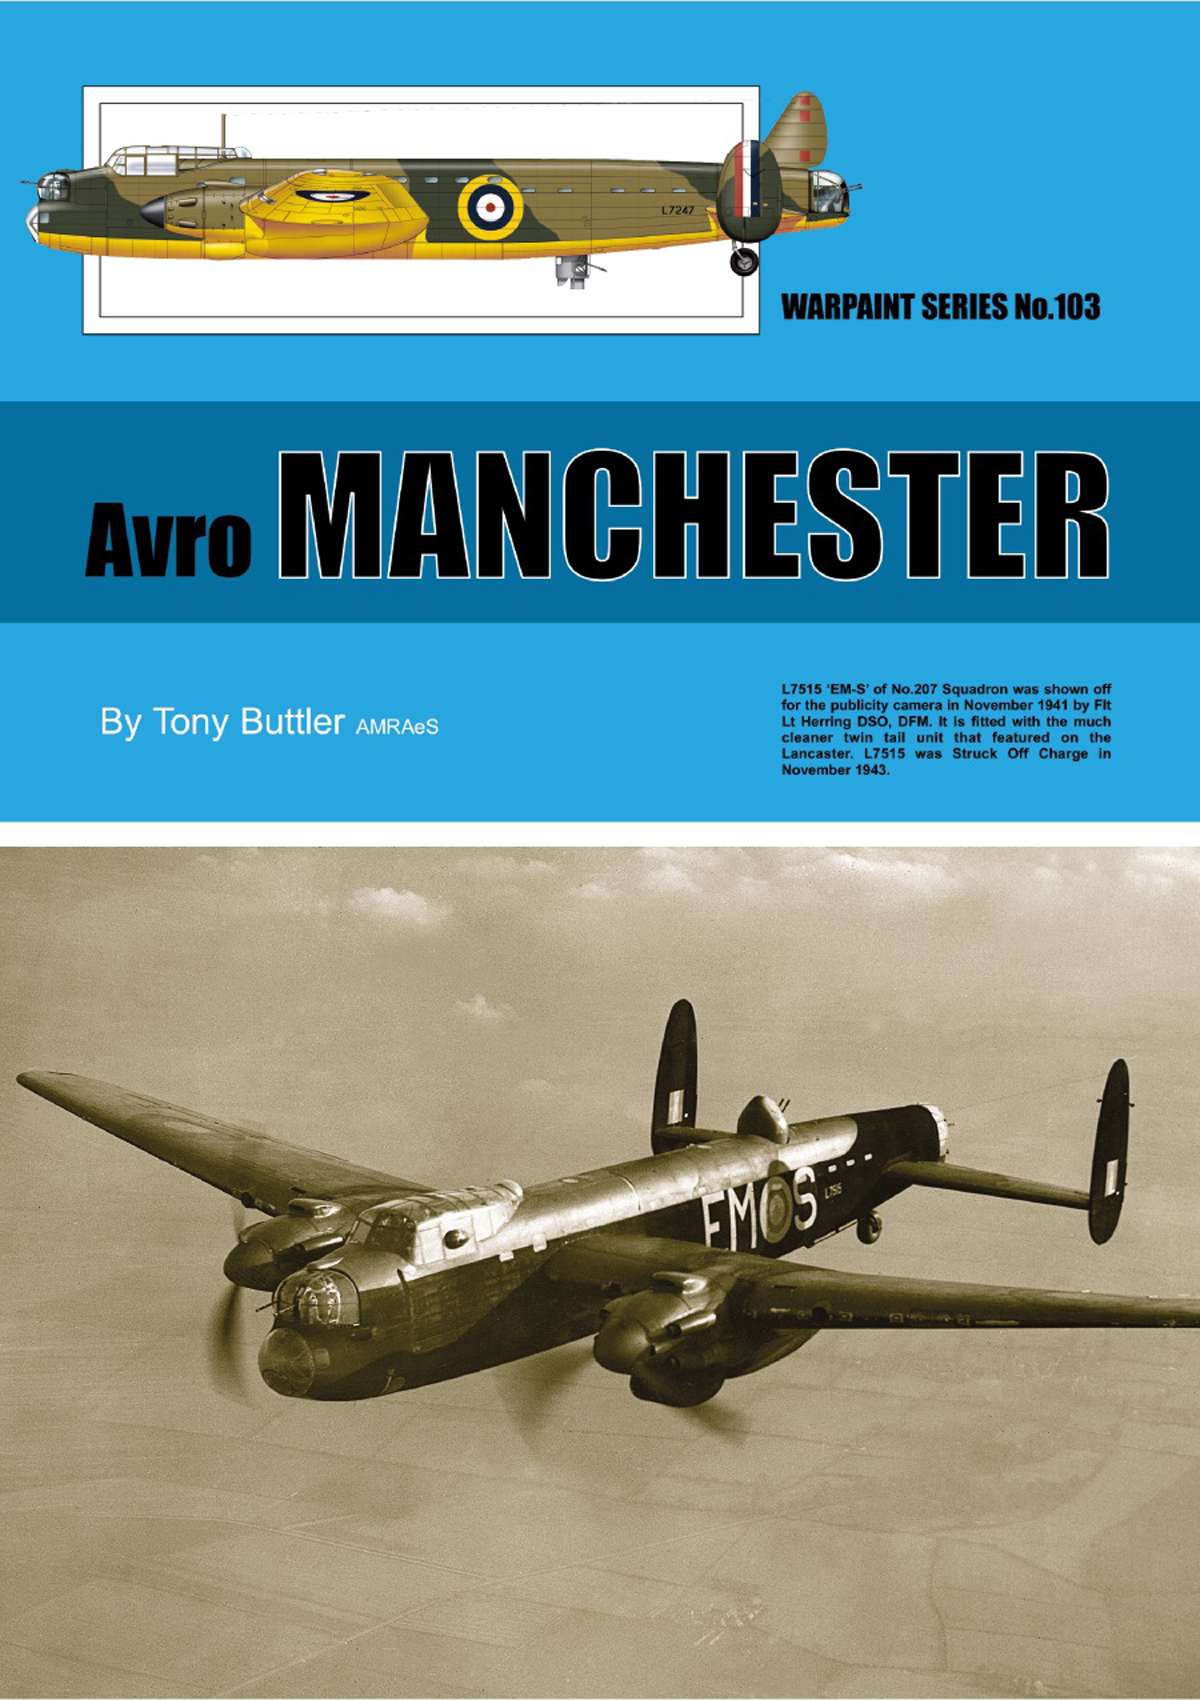 N103 - Avro Manchester